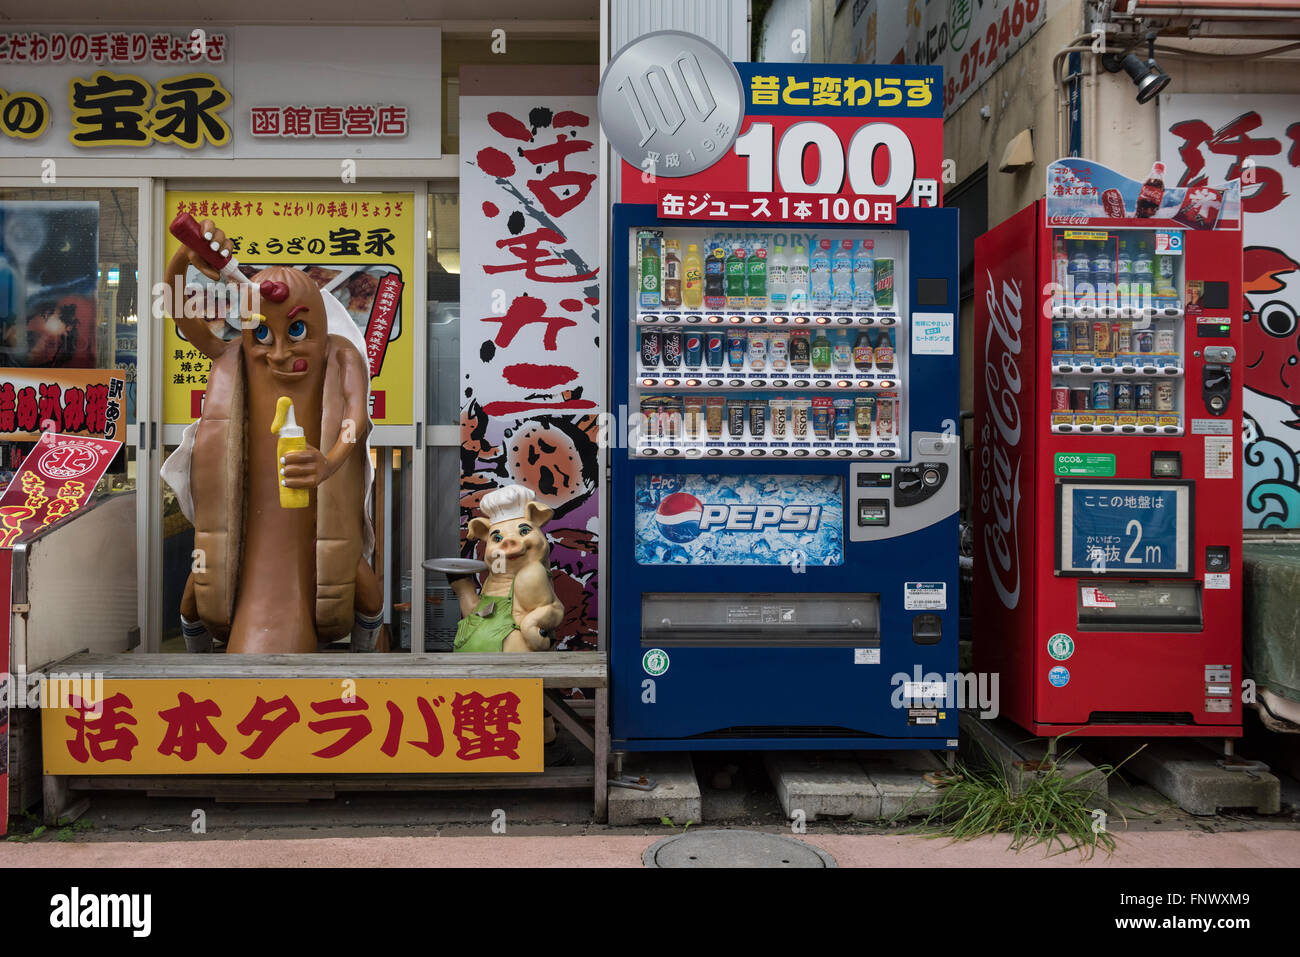 Japanese Vending Machines and Giant Hot Dog outside a Restaurant in Hakodate, Hokkaido, Japan Stock Photo